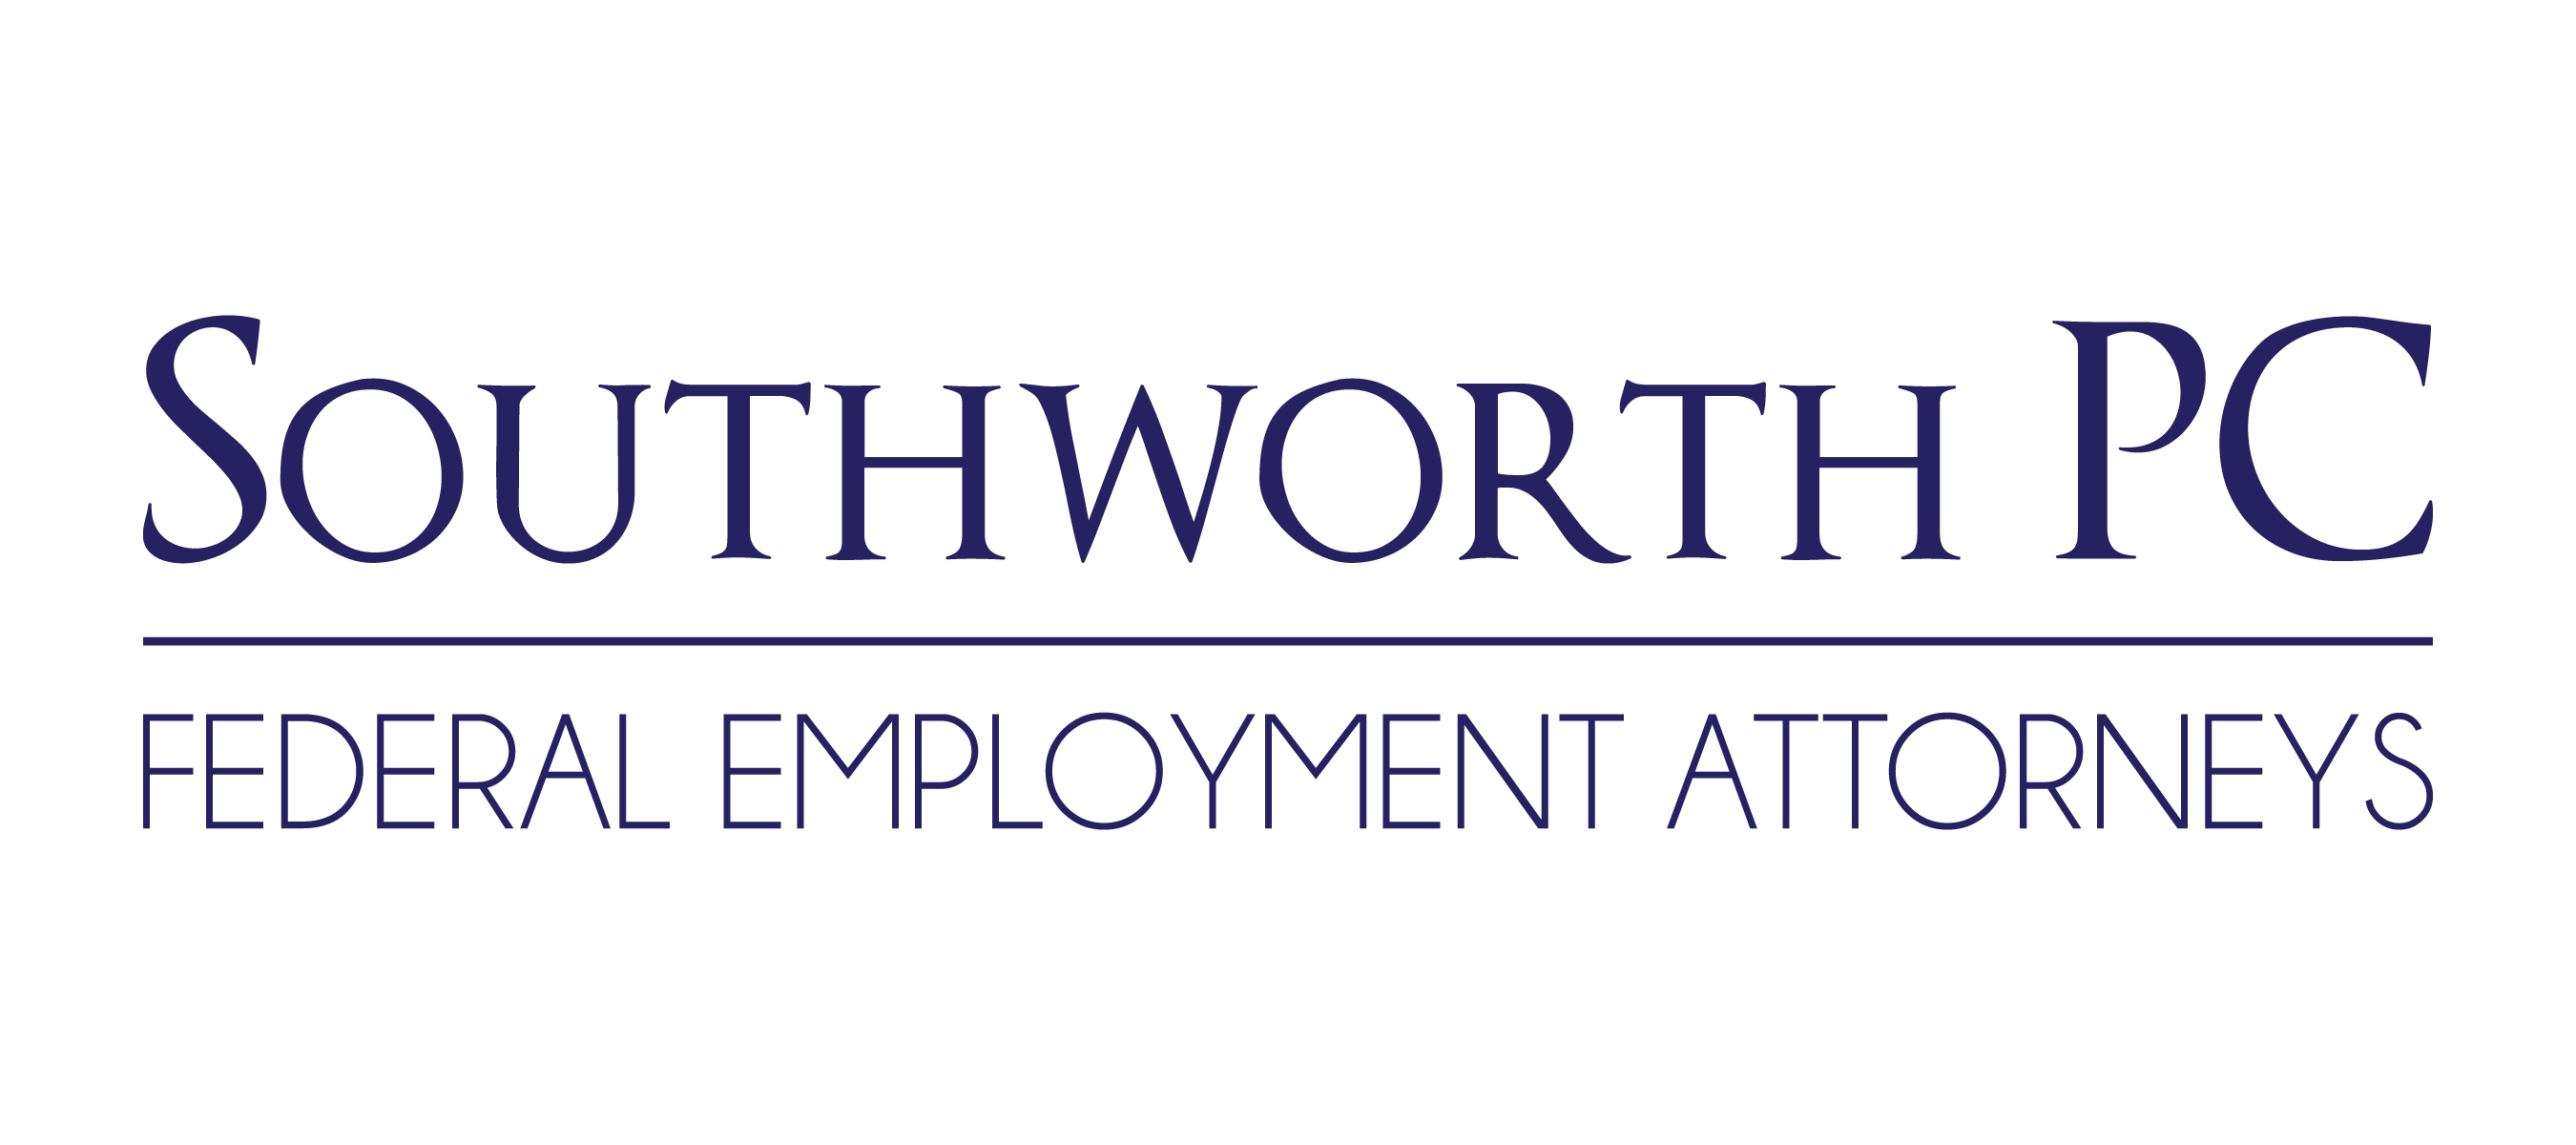 southworth pc federal employment attorney